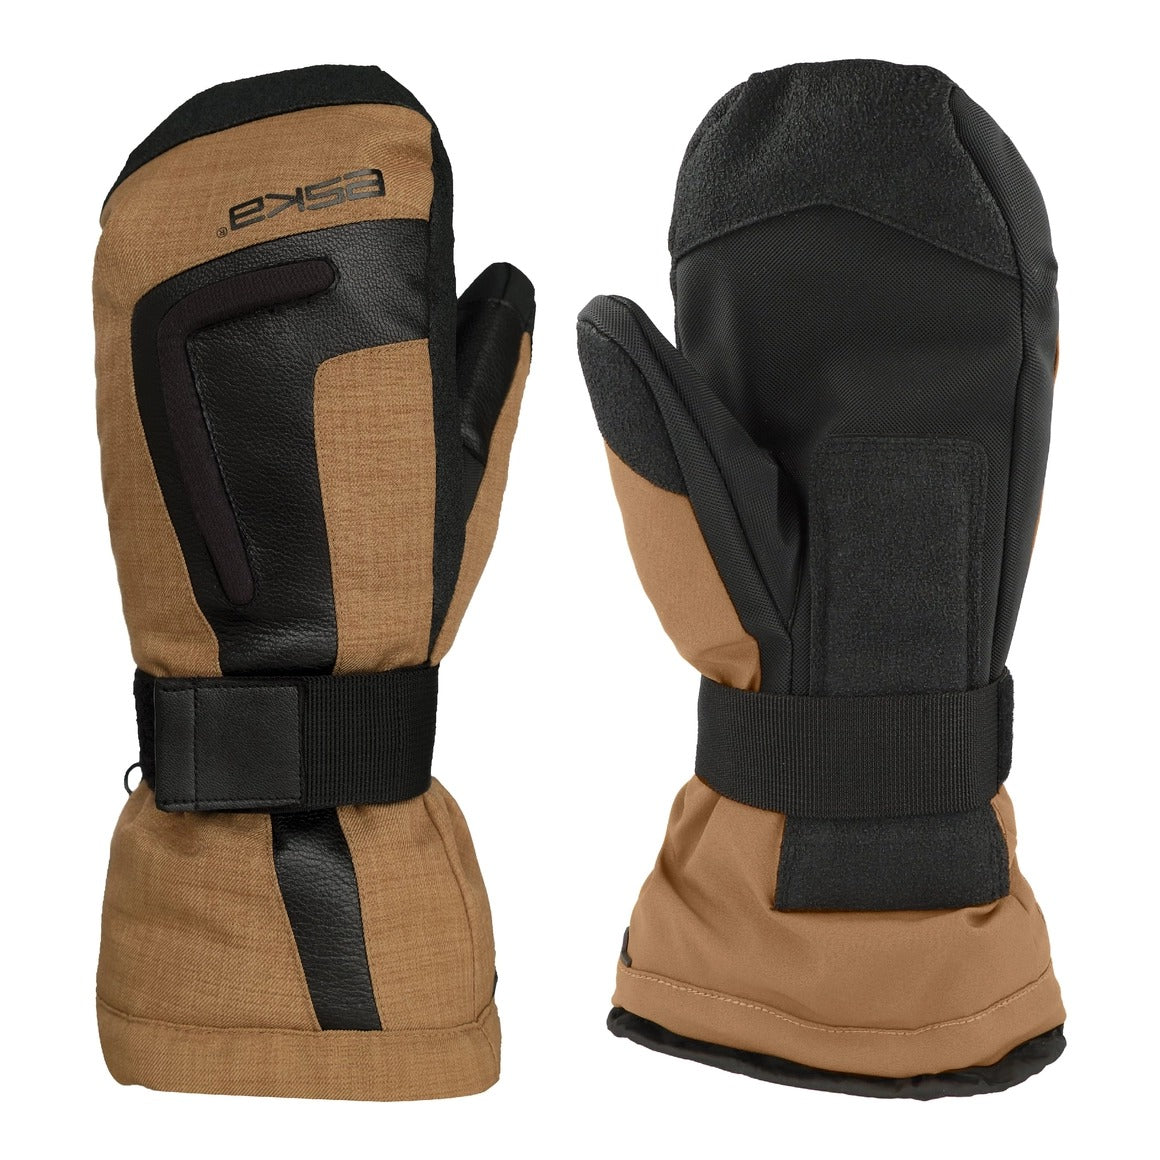 Snow Glove built in wrist Guard - ESKA PINKY- Black/ Merlange